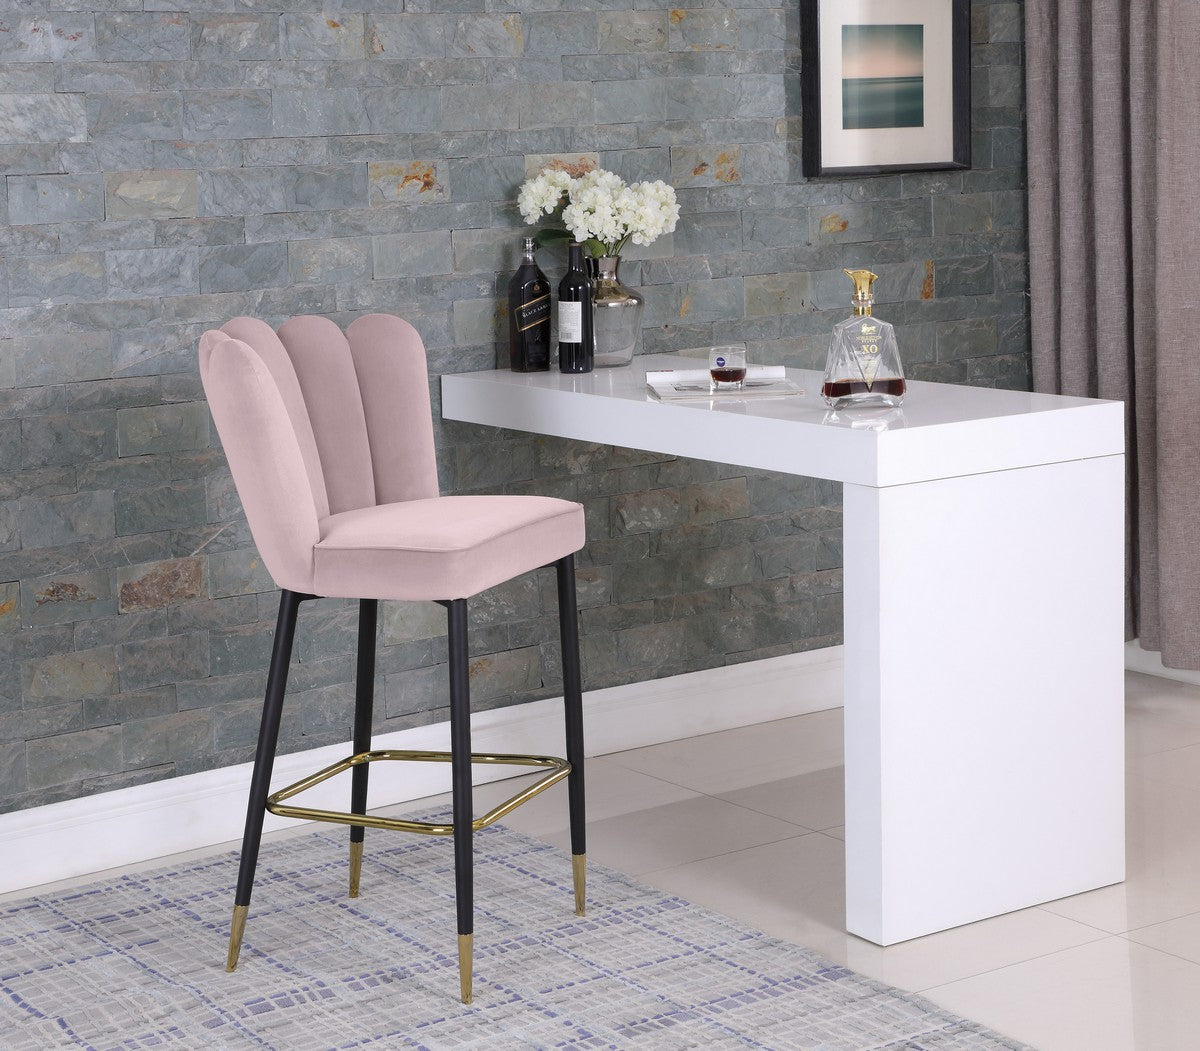 Meridian Furniture Lily Pink Velvet Stool - Set of 2